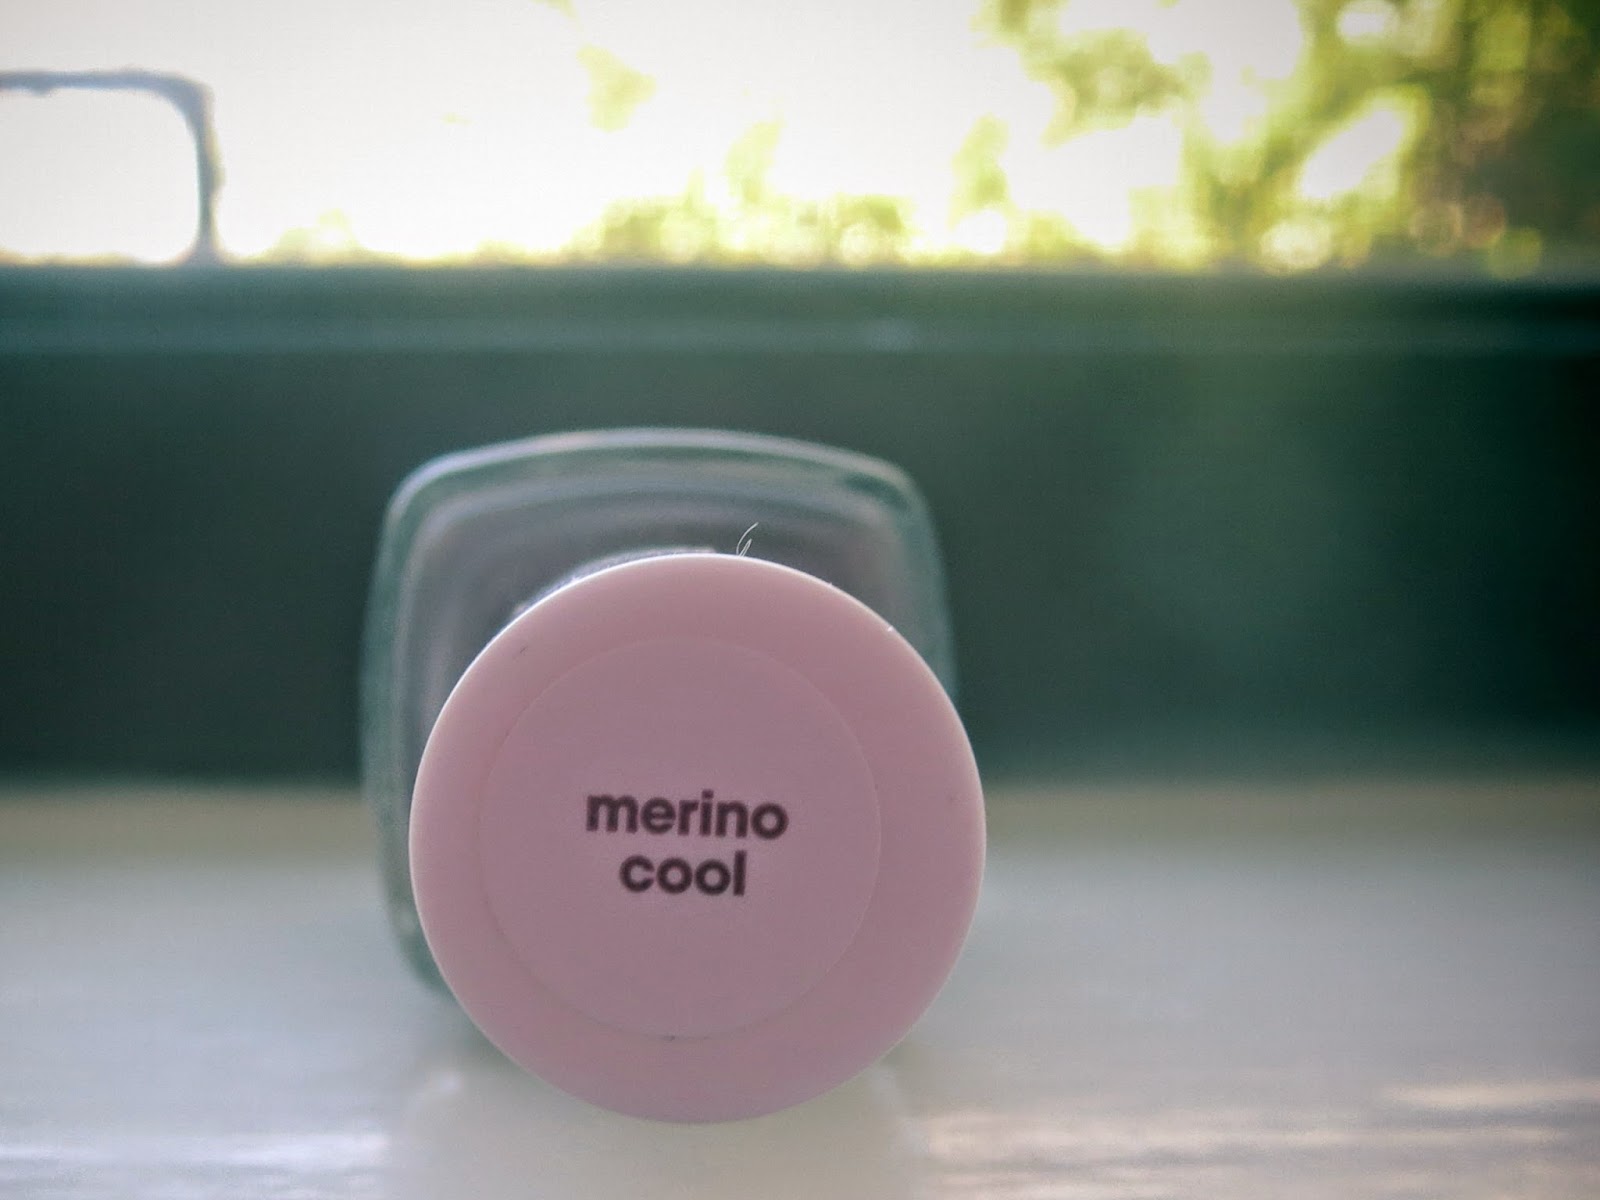 A picture of Essie's Merino Cool